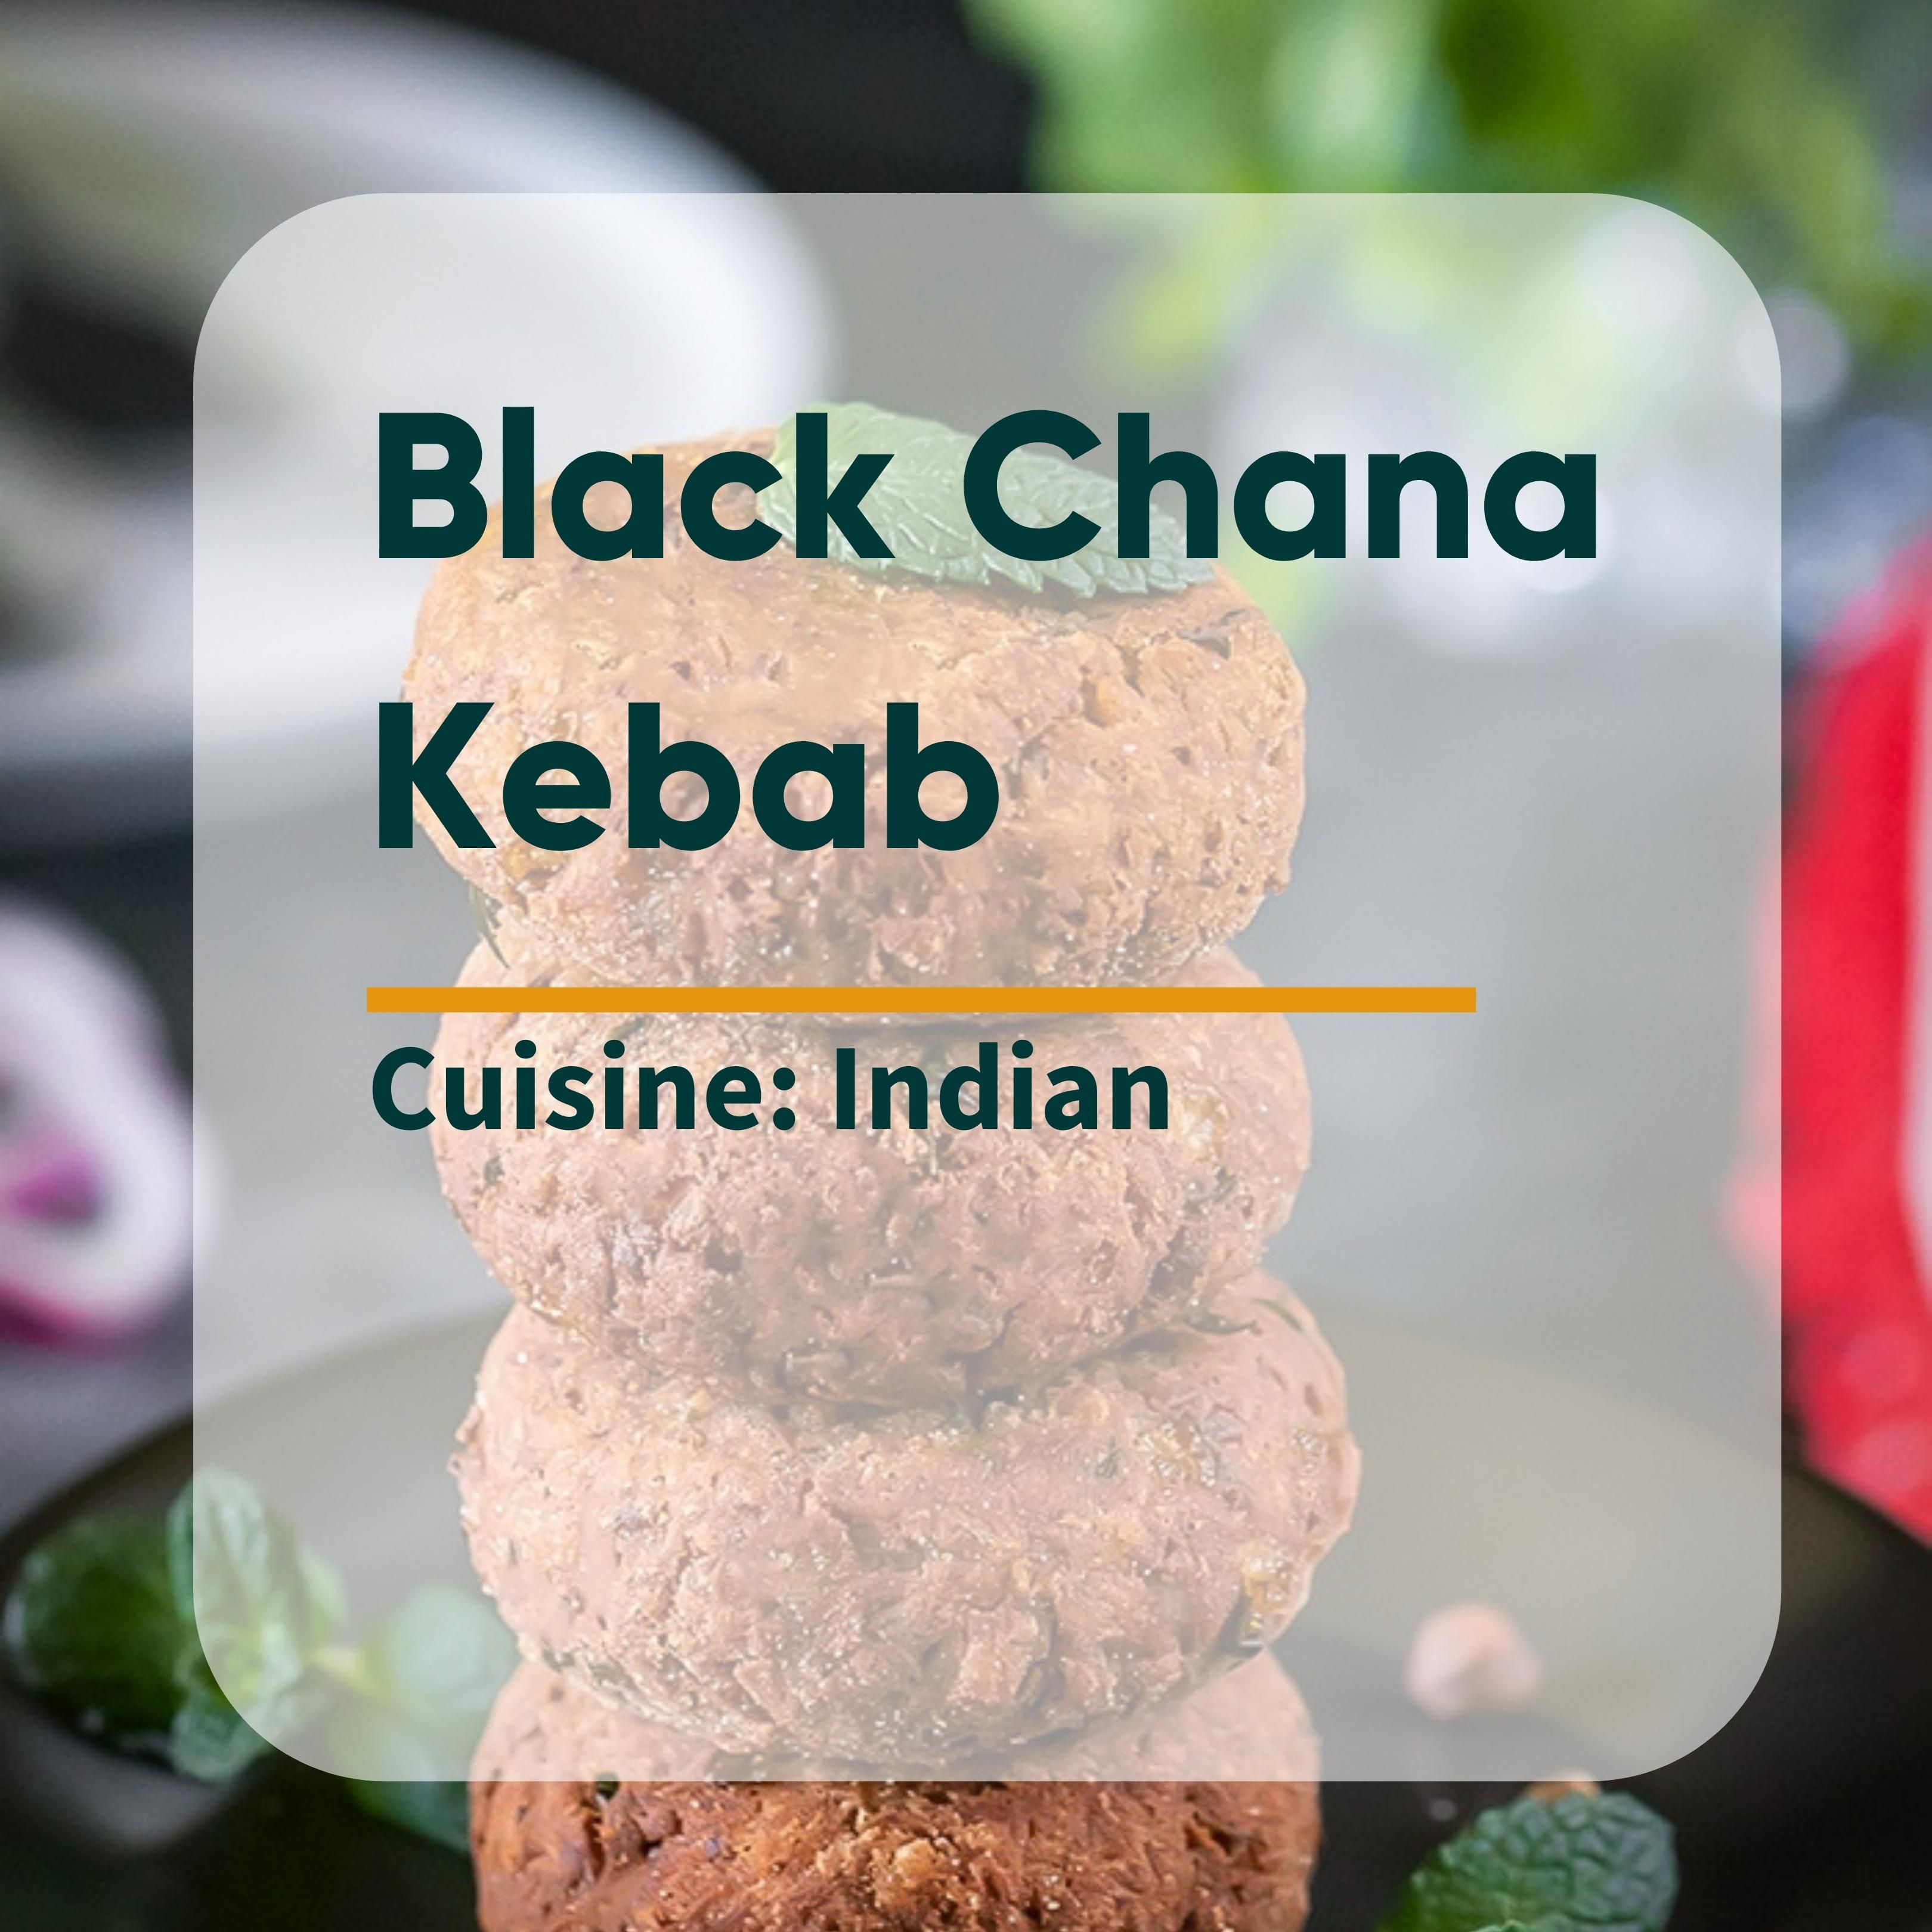 Black Chana Kebab Image